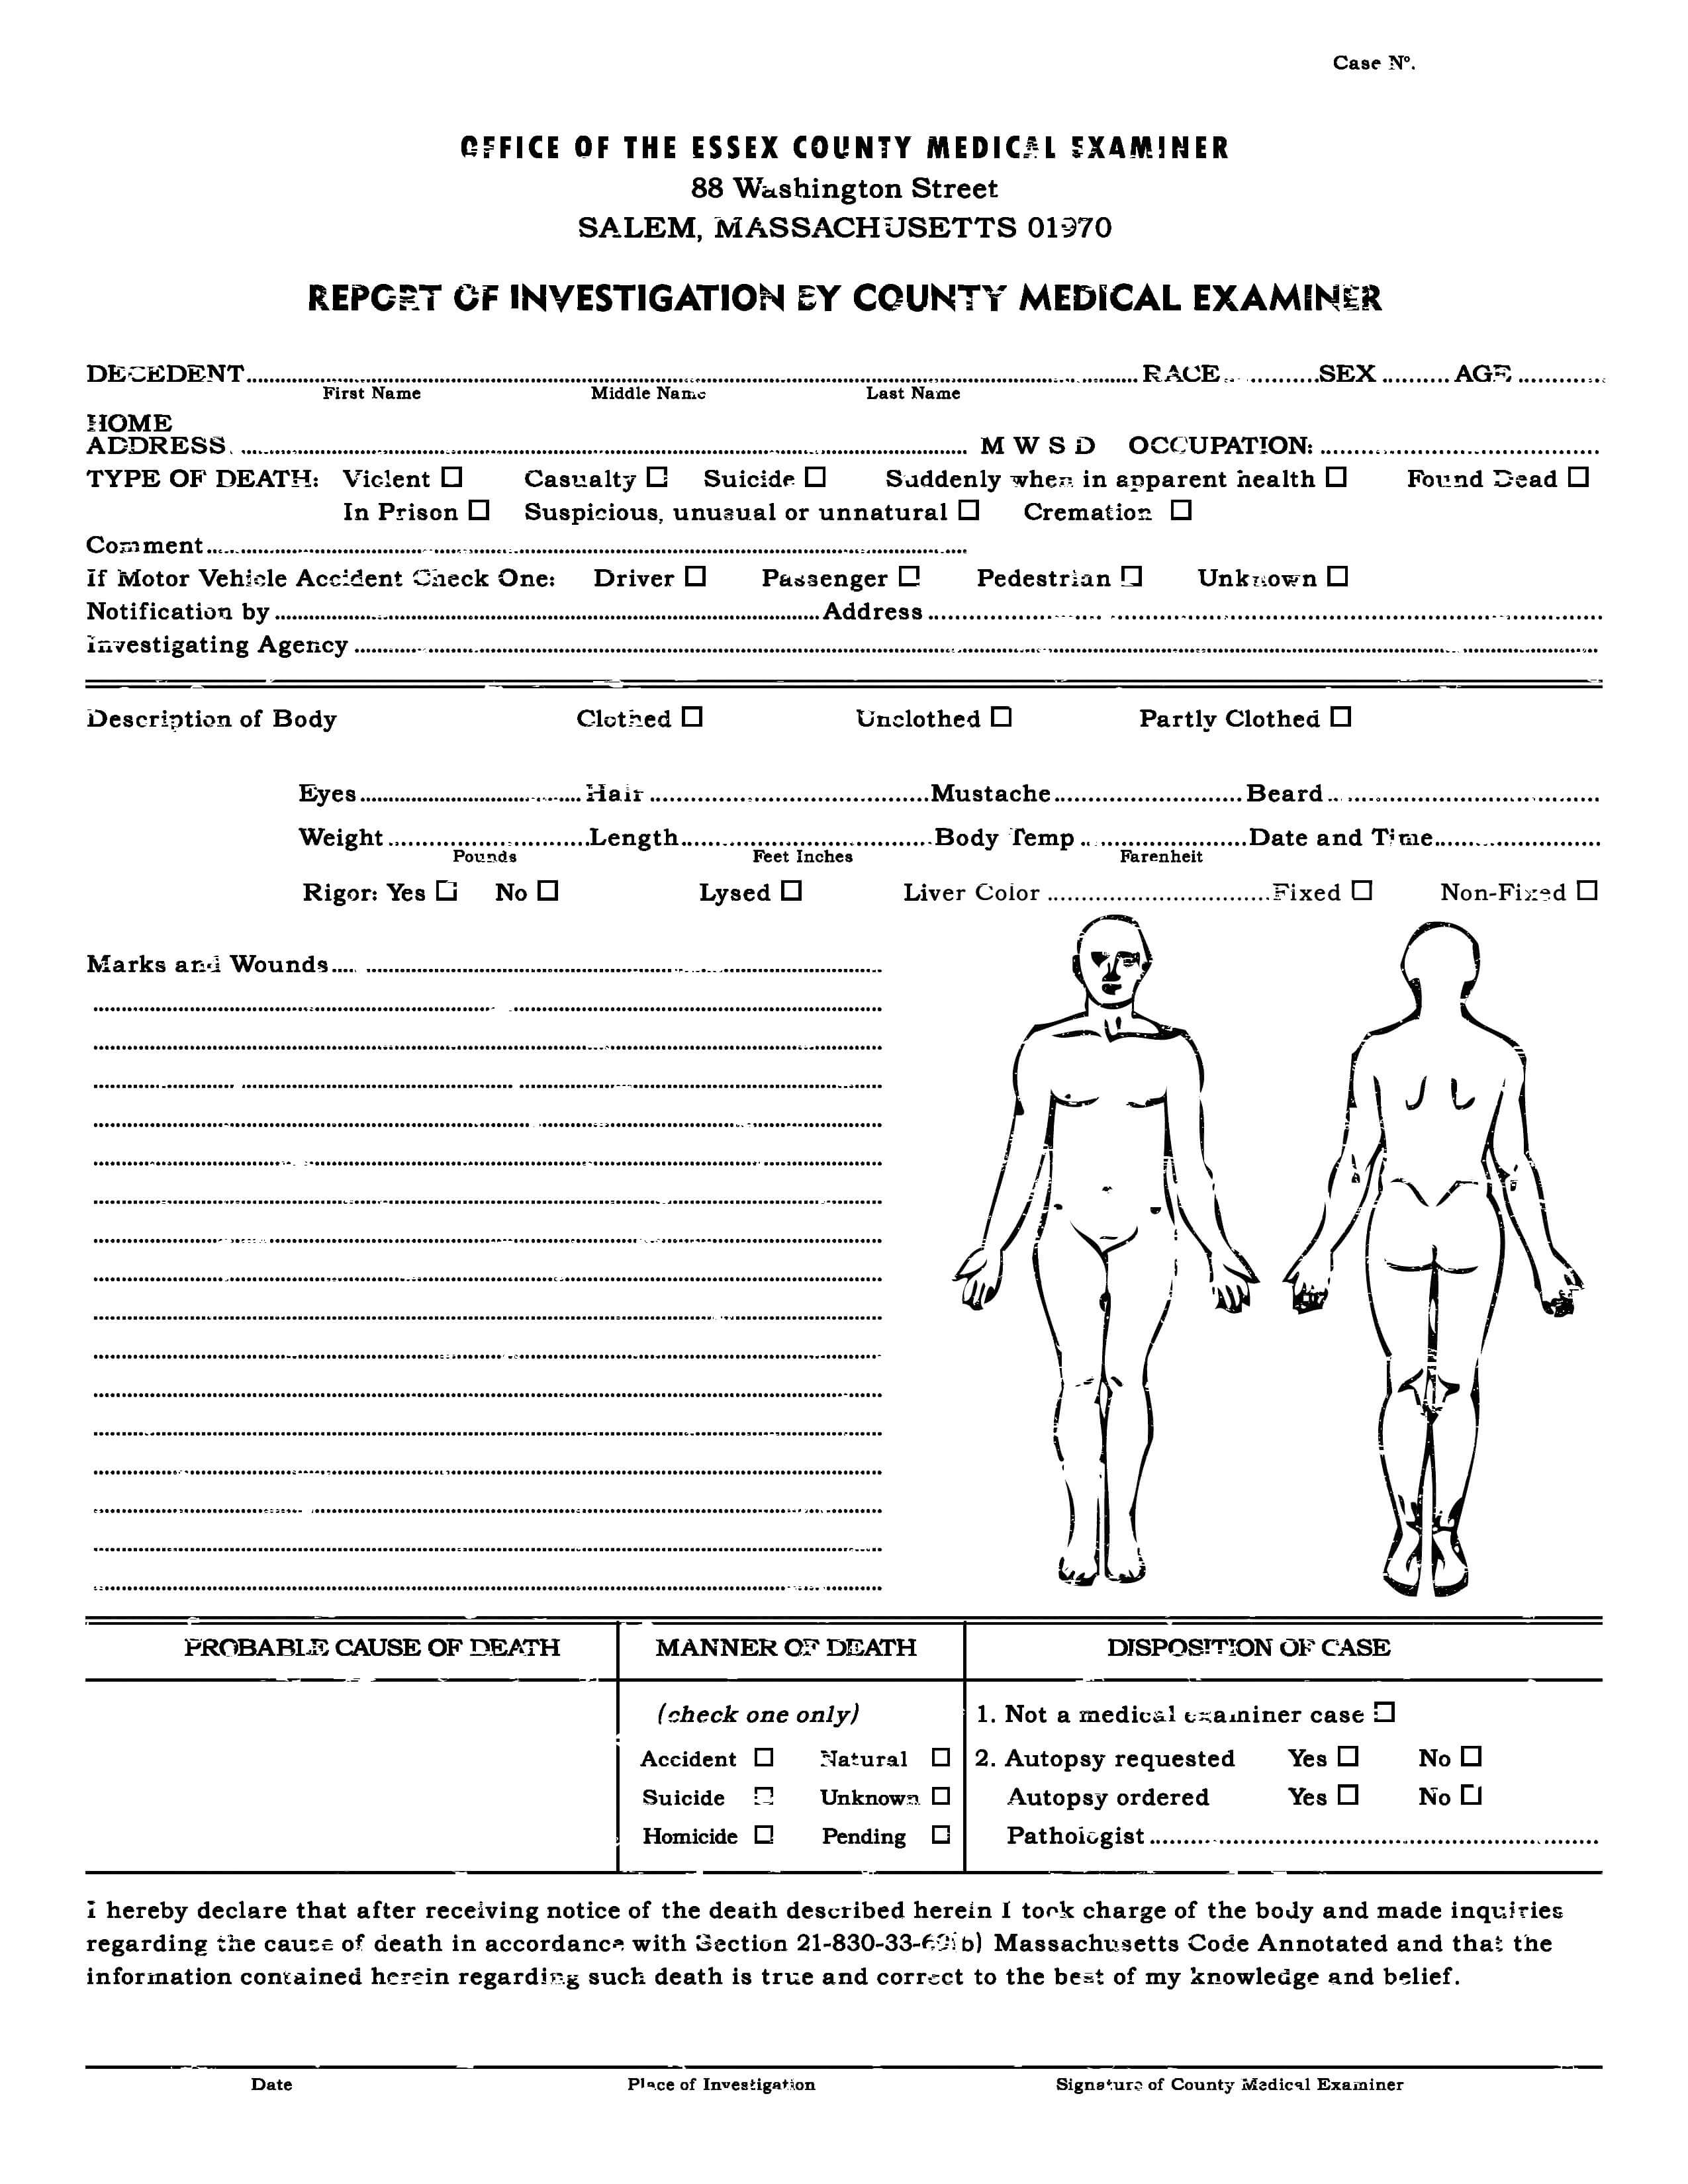 Autopsy Report Template – Atlantaauctionco Throughout Autopsy Report Template